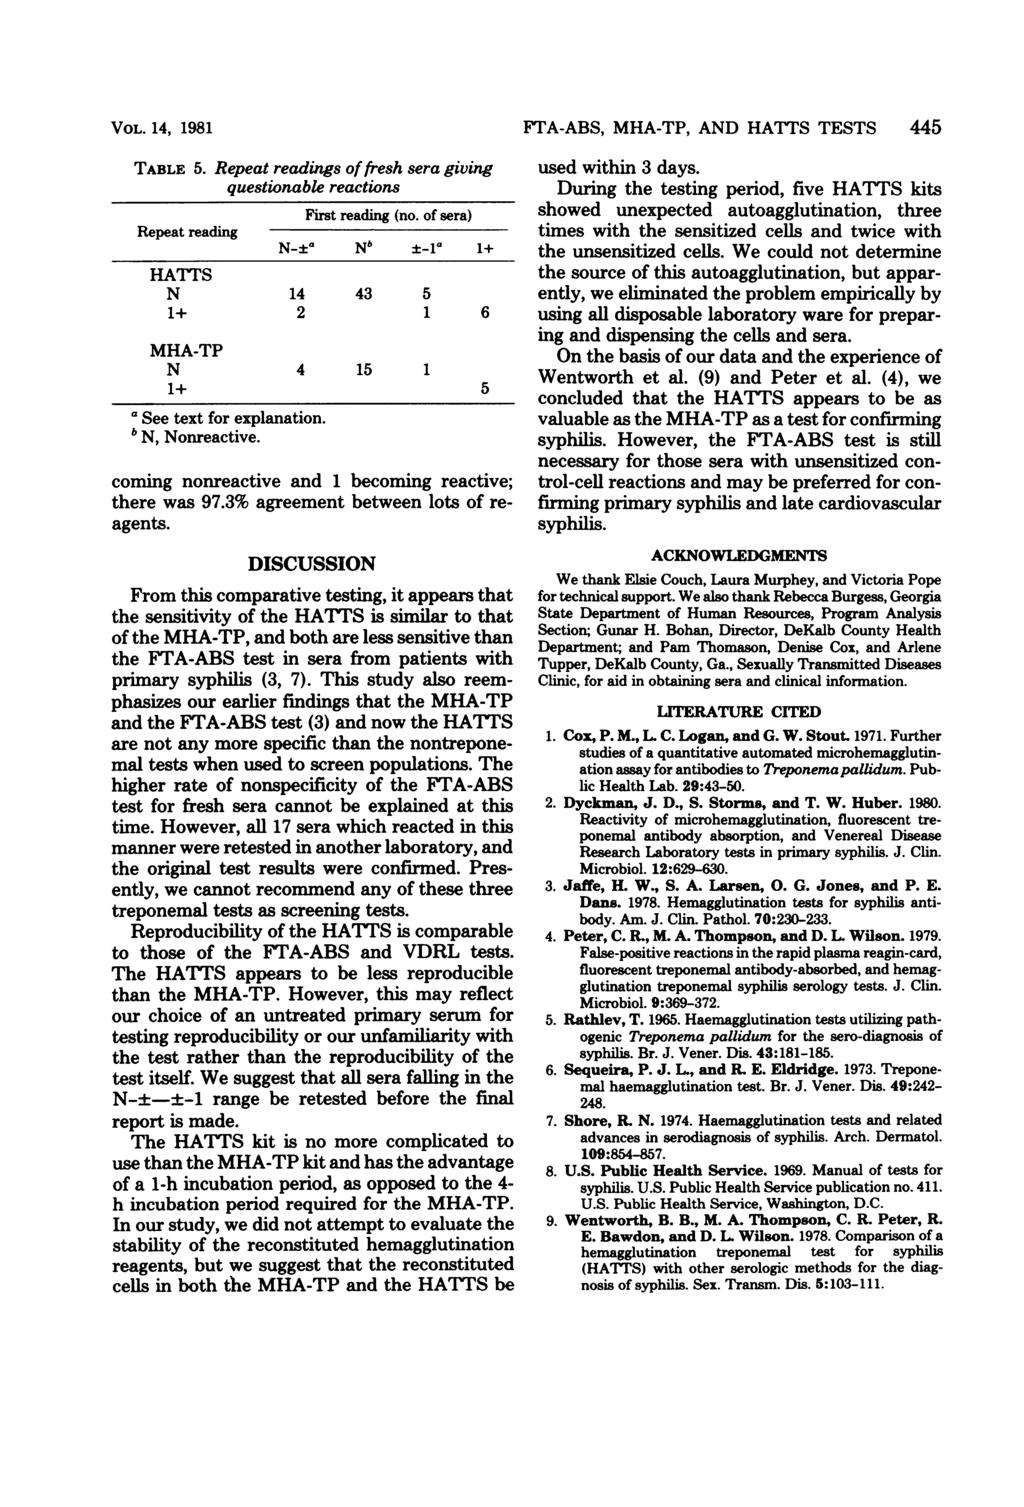 VOL. 14, 1981 TABLE 5. Repeat readings offresh sera giving questionable reactions Repeat reading First reading (no.